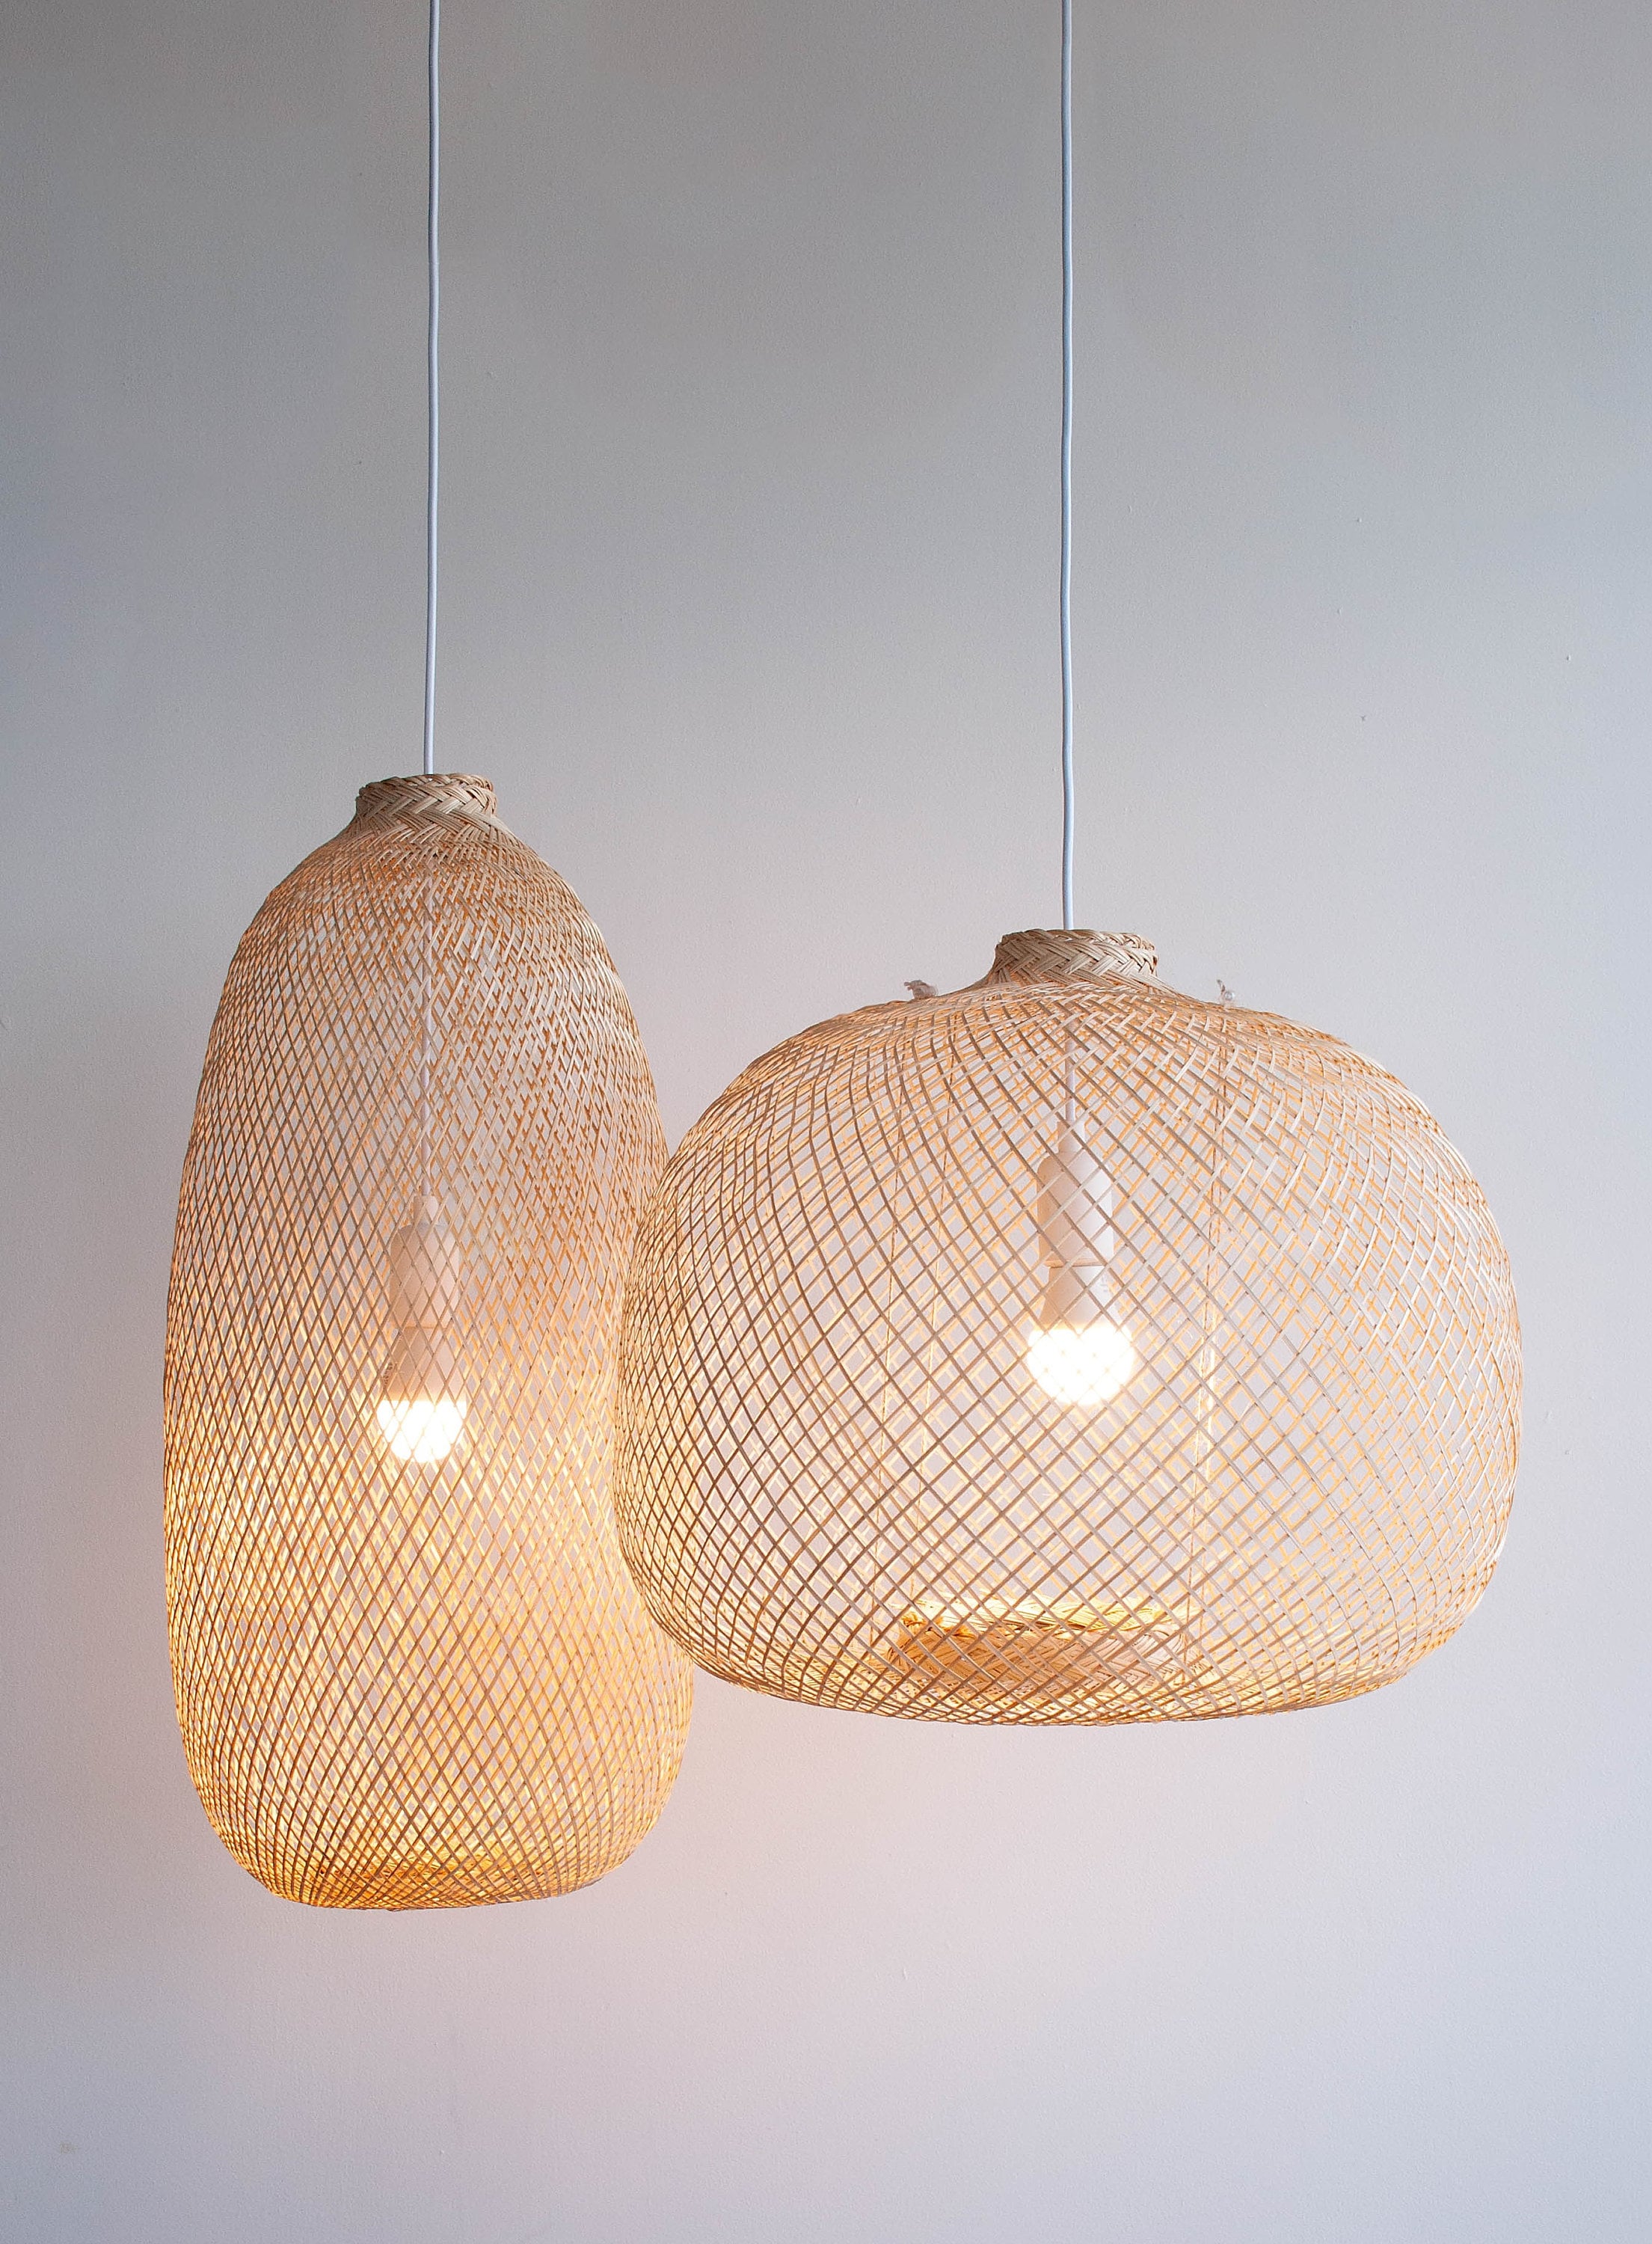 Chinese Lamp Shade Lantern Retro Beautiful Japan Ceiling Asian Bamboo Oriental 